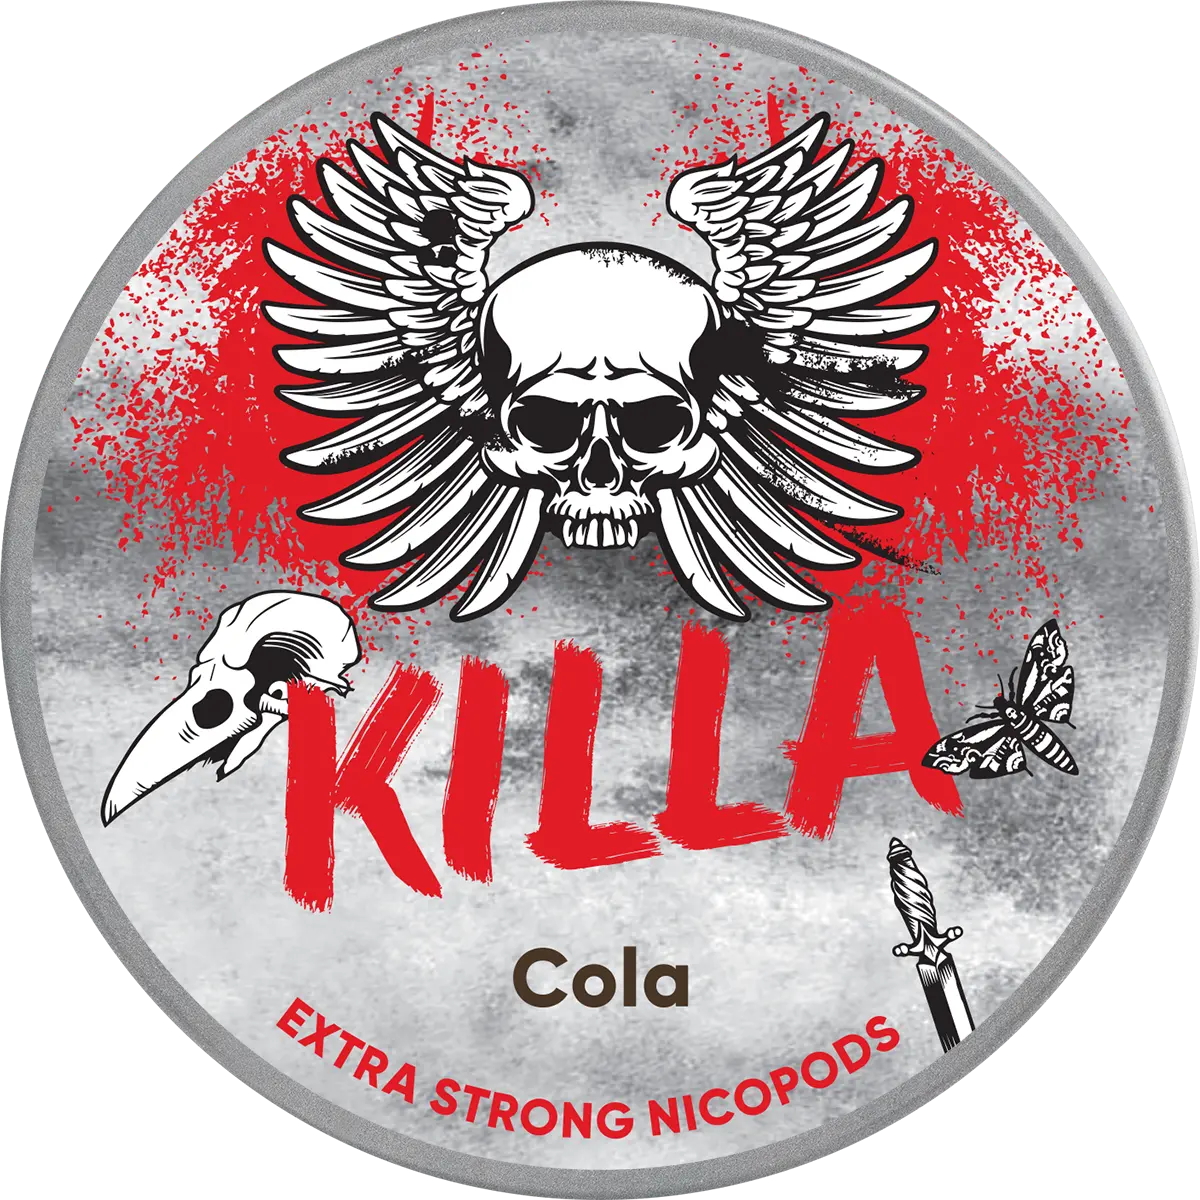 KILLA Cola 10g 16mg/g